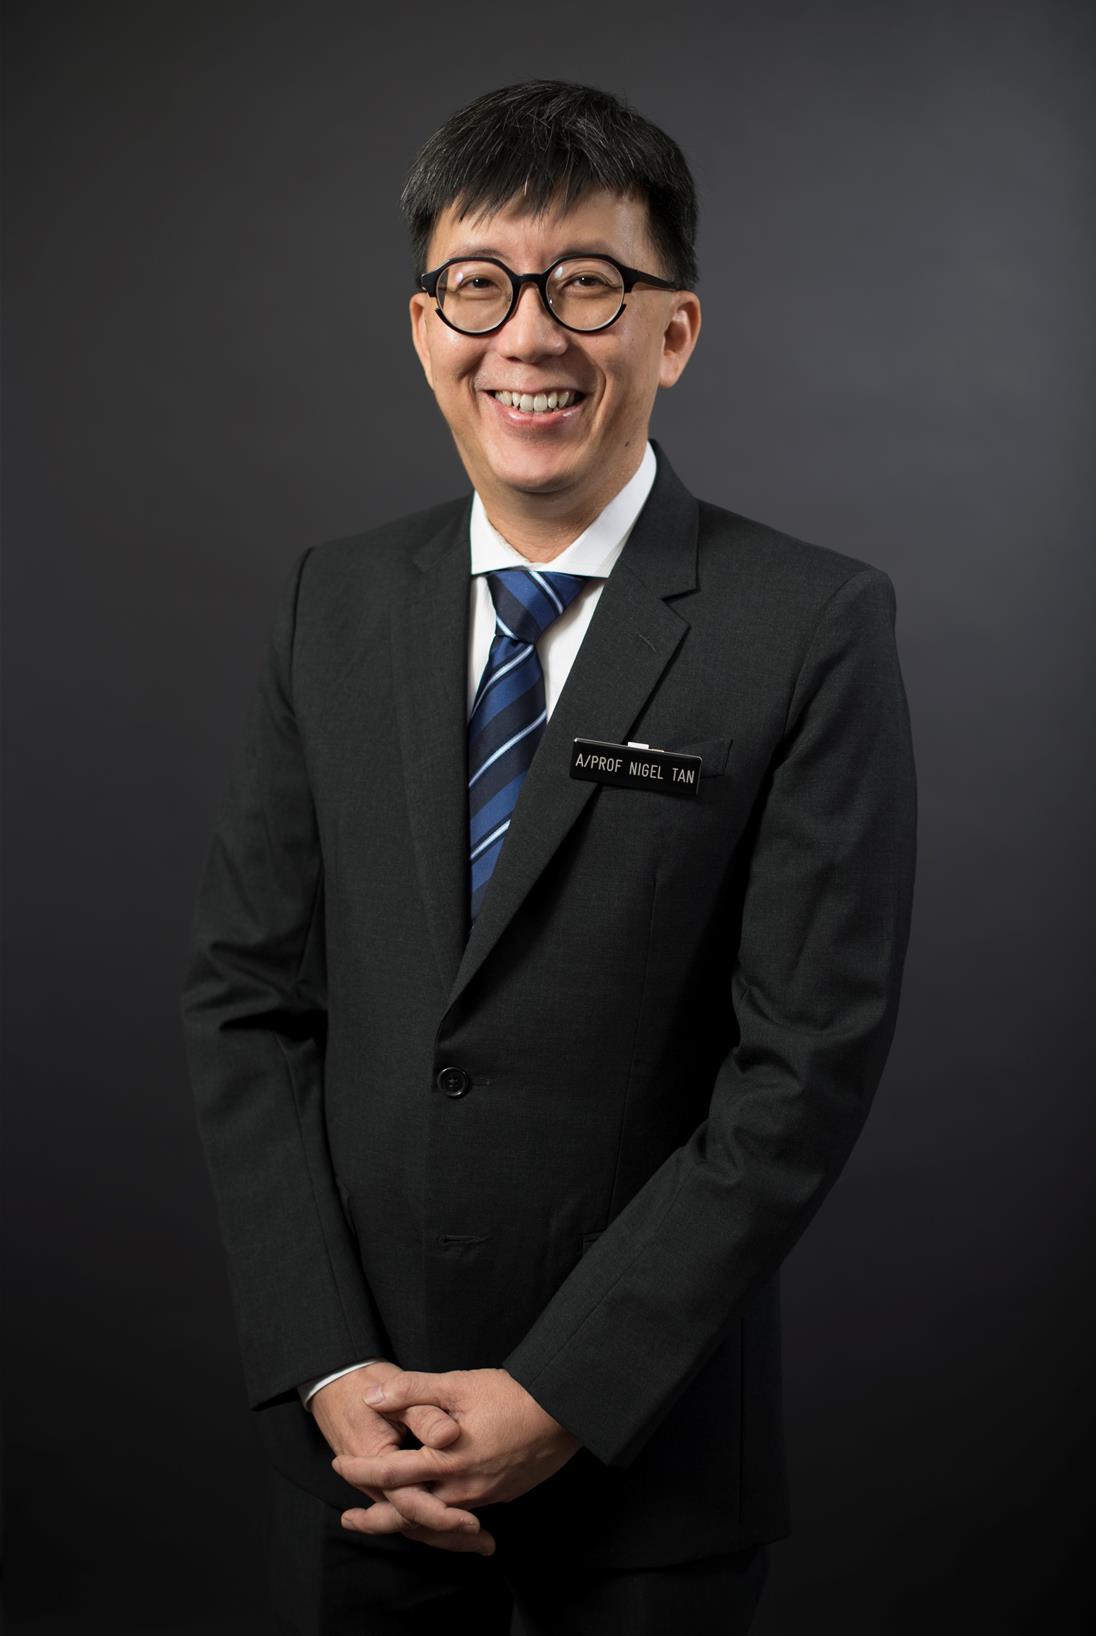 Clinical Associate Professor Nigel Tan